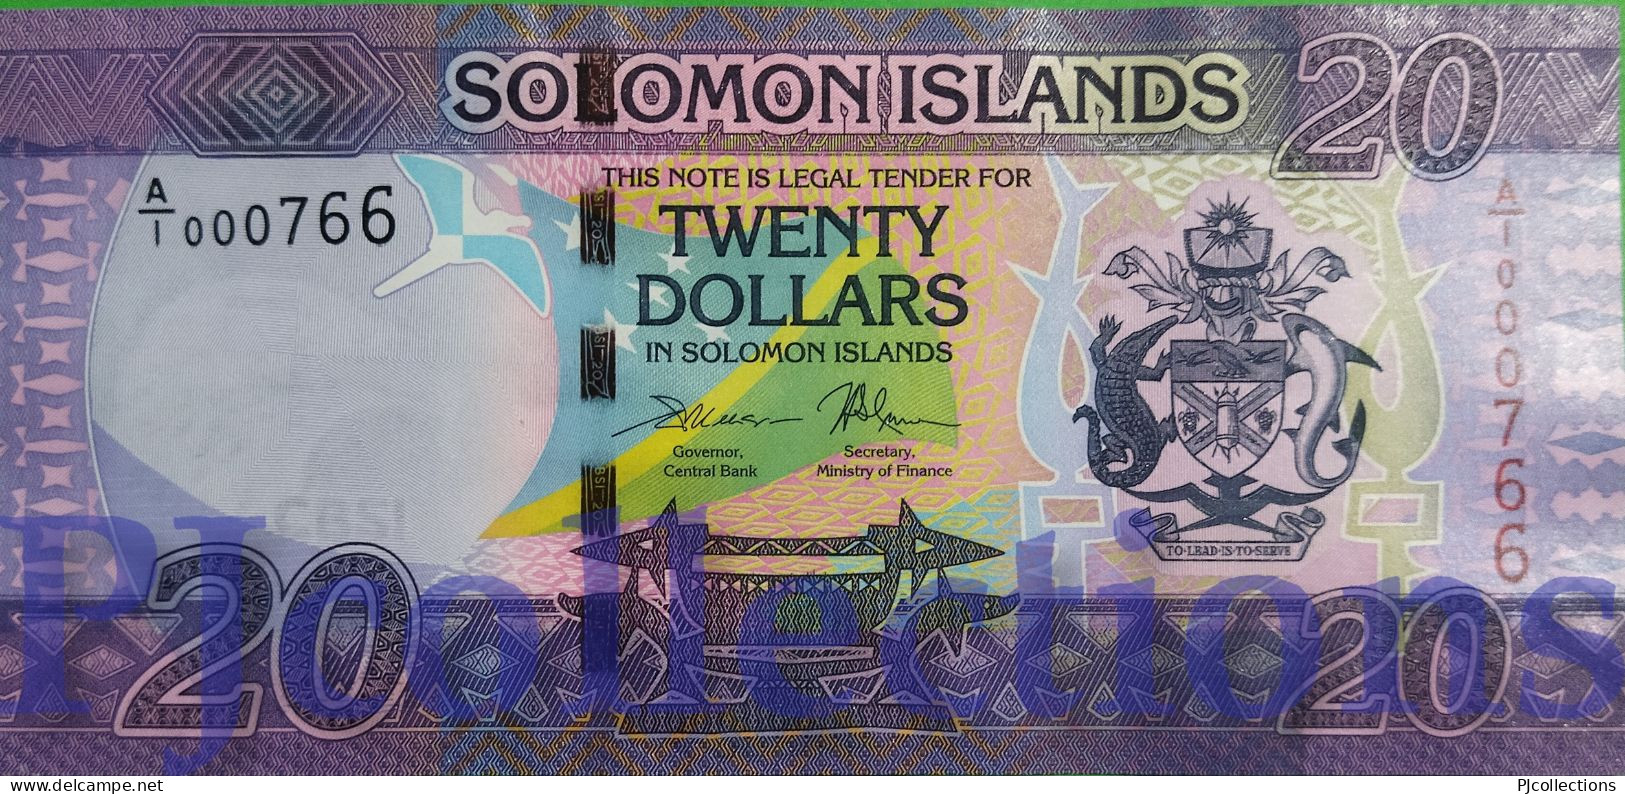 SOLOMON ISLANDS 20 DOLLARS 2017 PICK 34 UNC LOW SERIAL NUMBER "A/1 000766" - Salomonseilanden